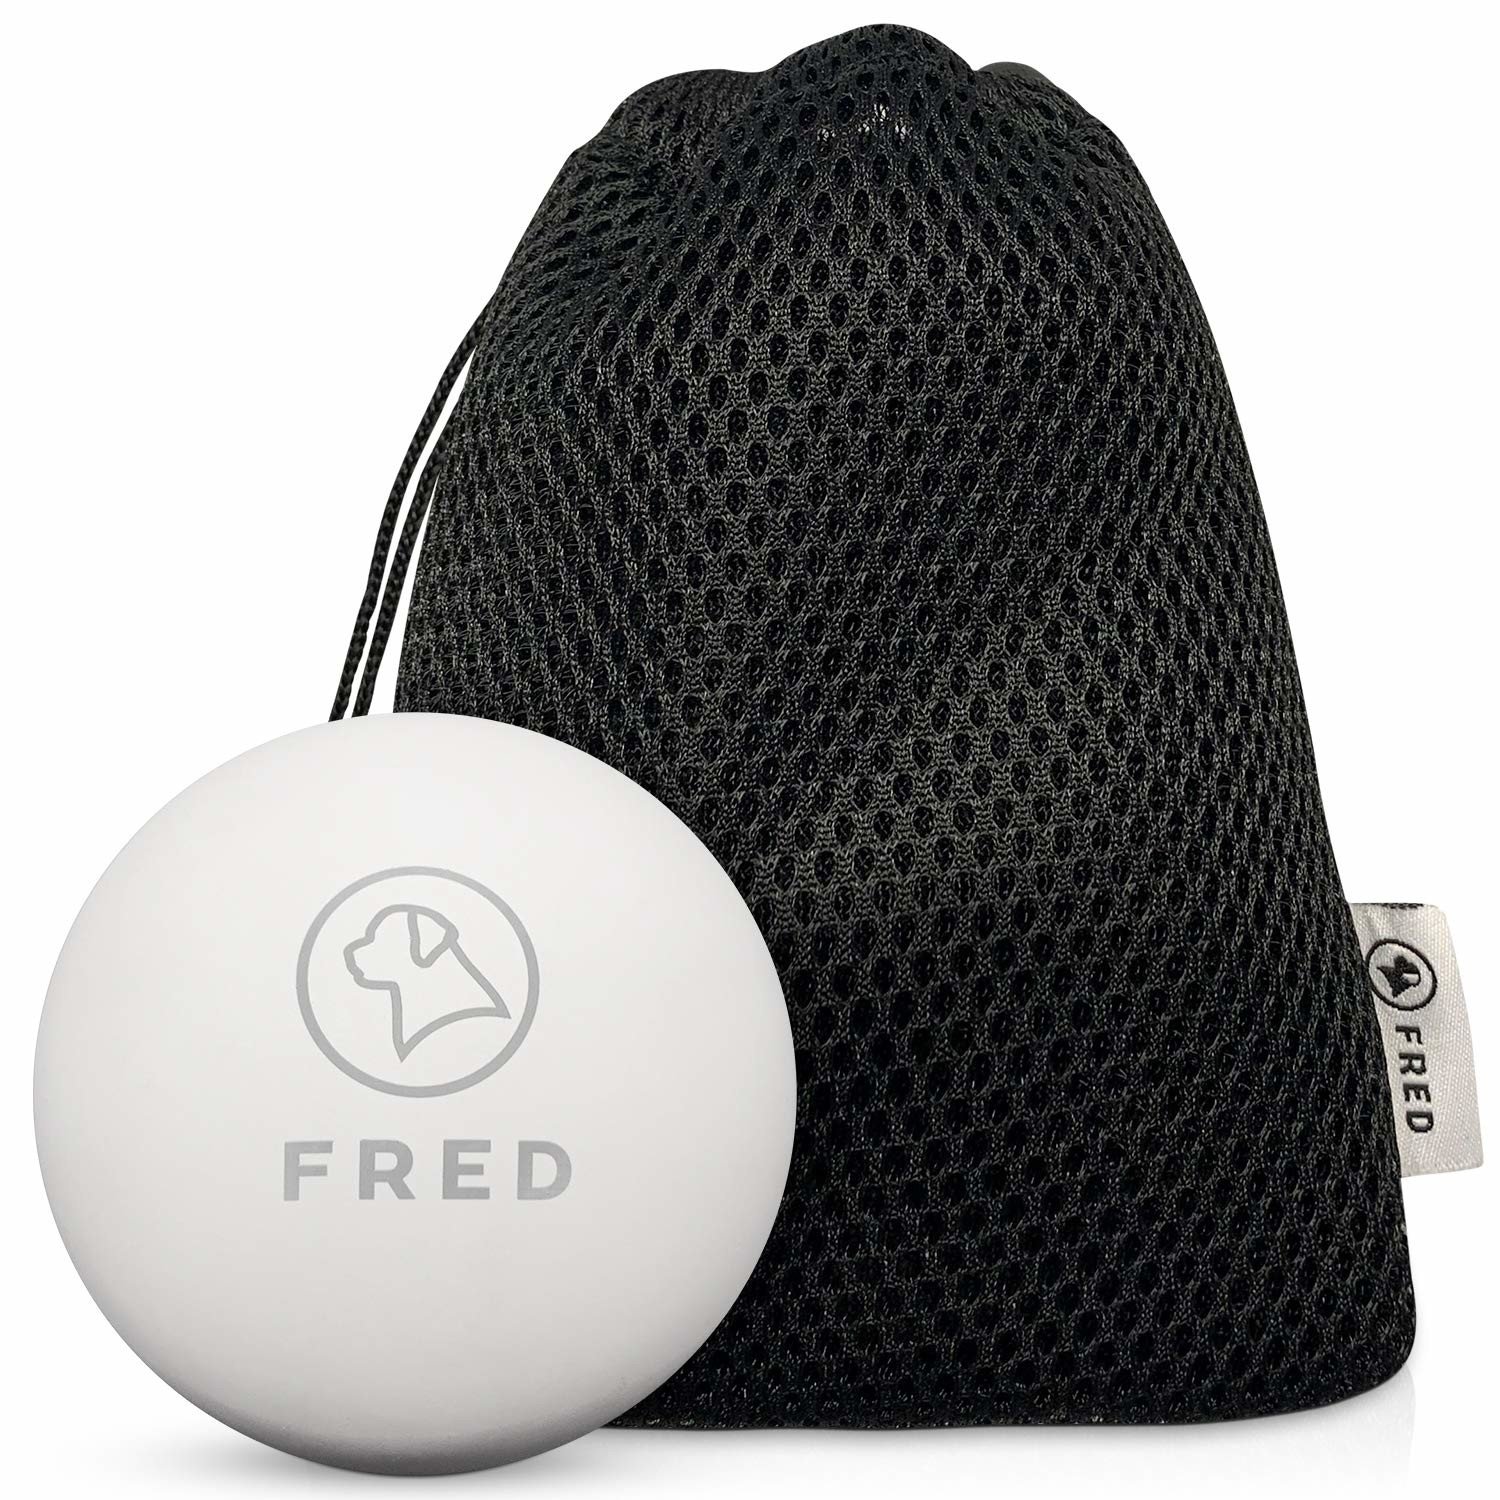 Psí míč Fred Premium vyrobený z gumy Natural